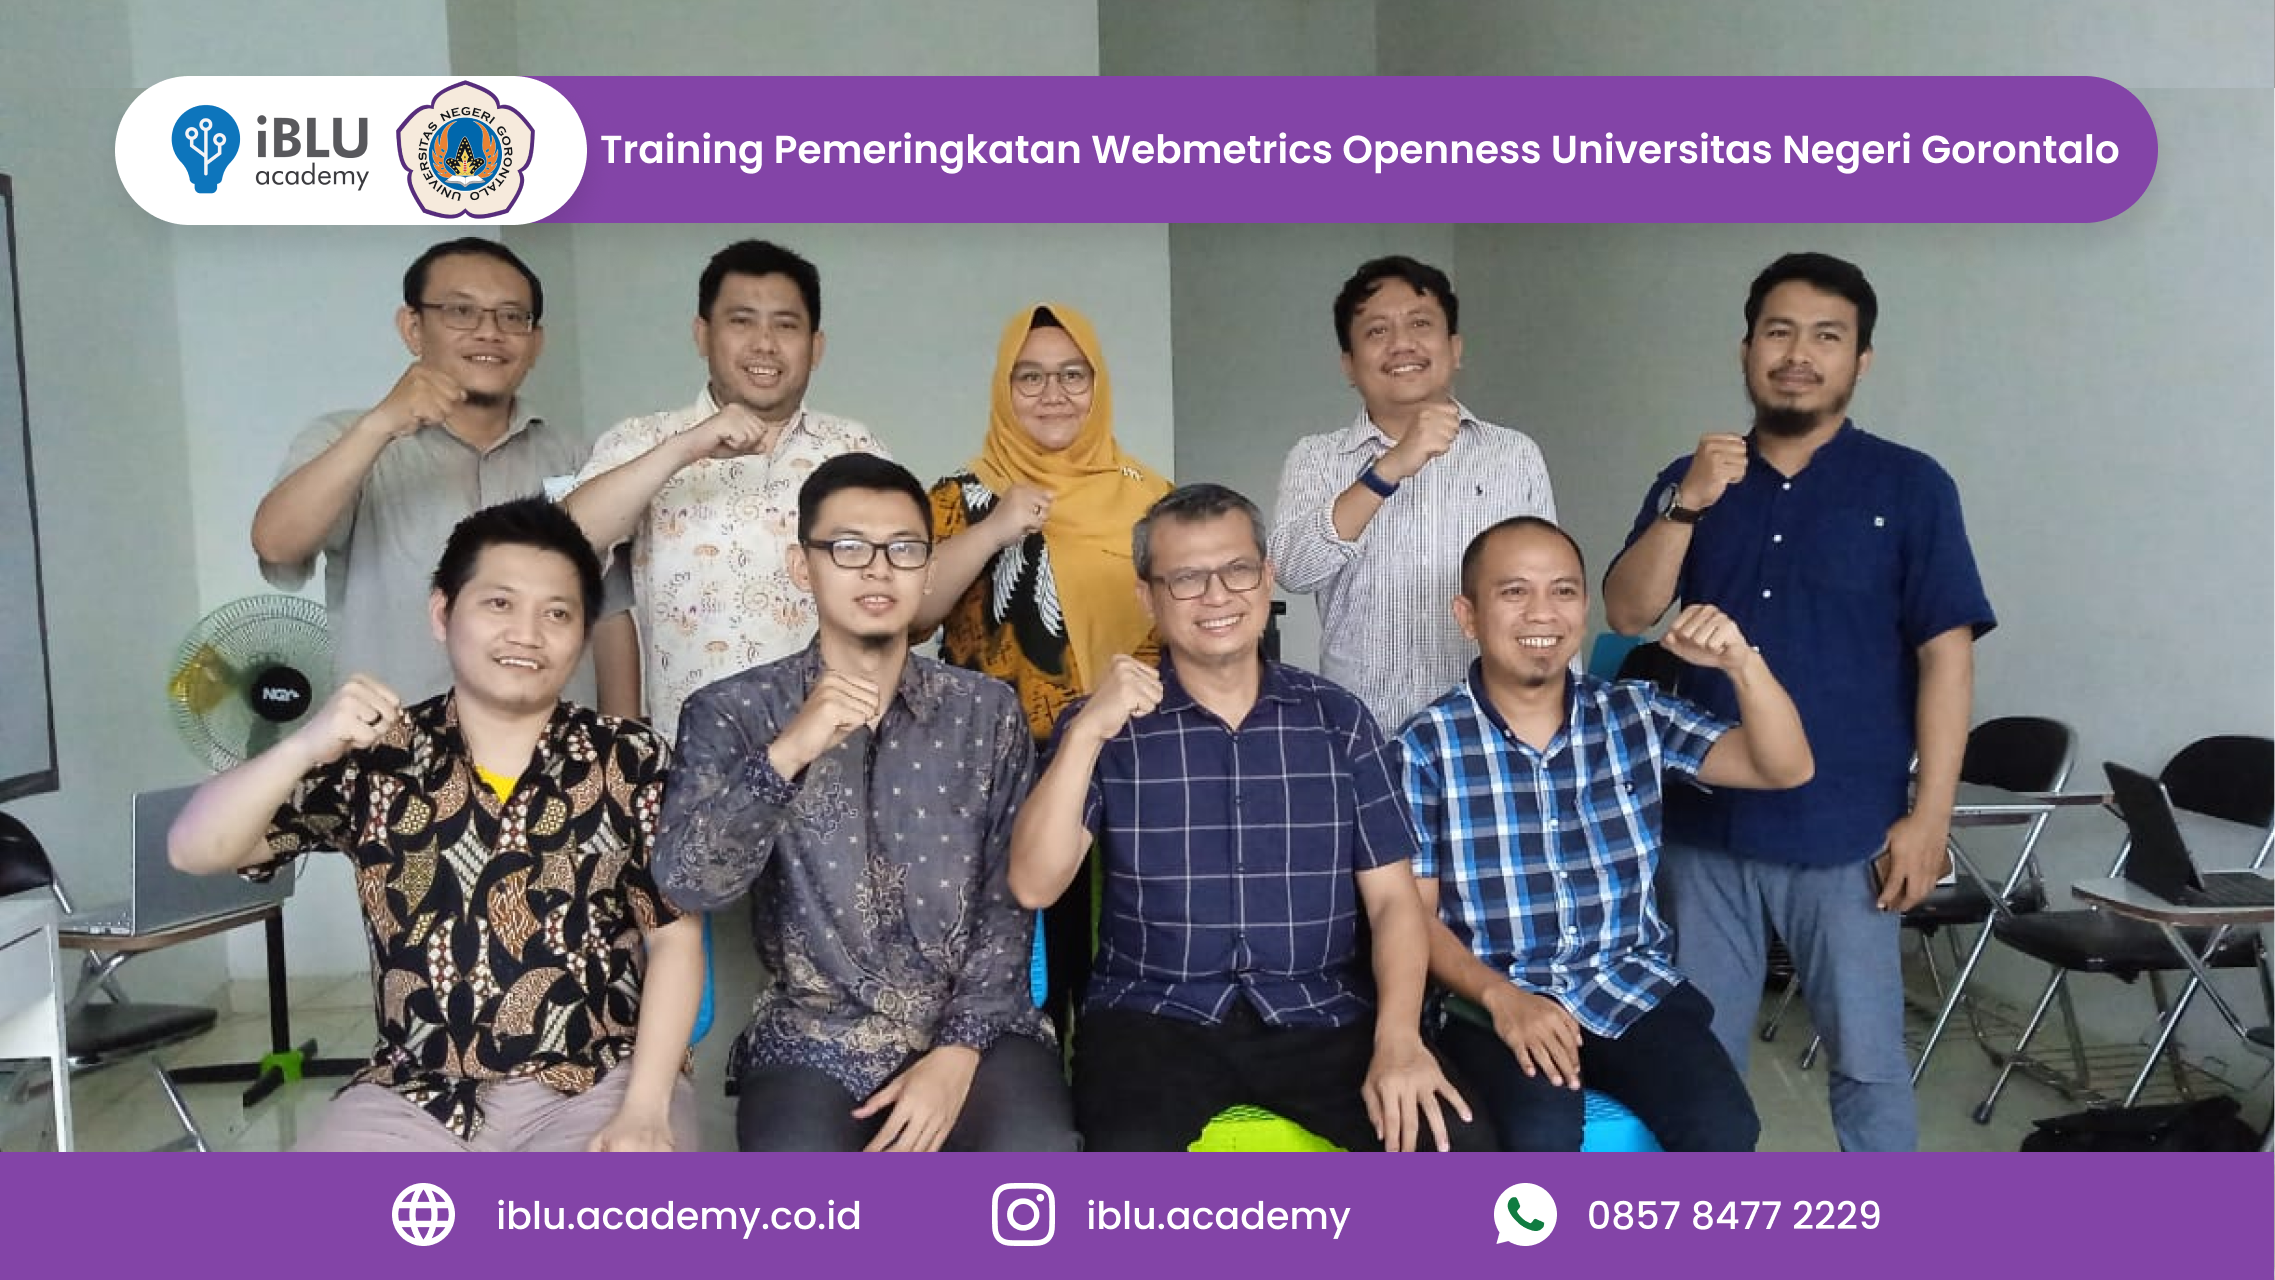 You are currently viewing Training Pemeringkatan Webometrics Indikator Openness Universitas Negeri Gorontalo